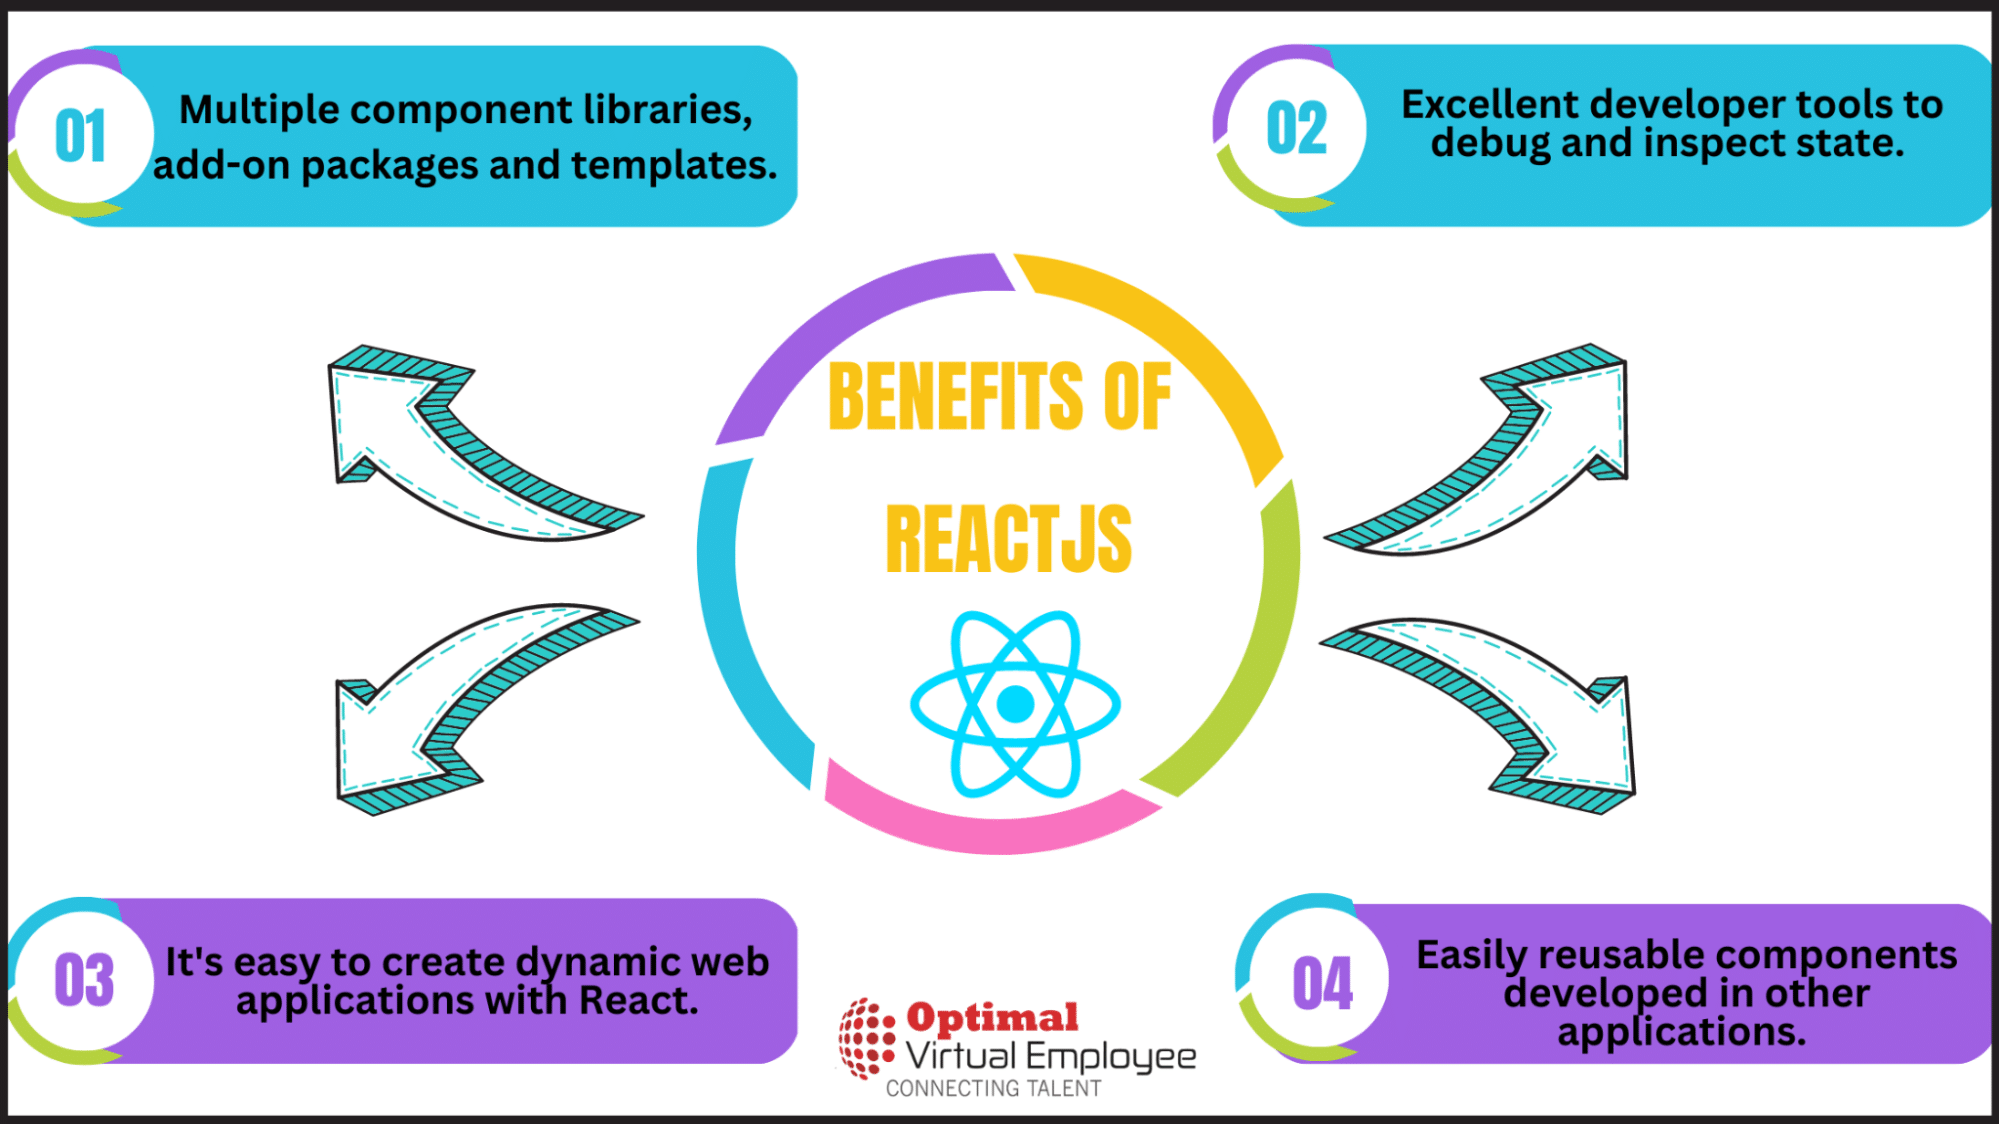 Advantages of ReactJs